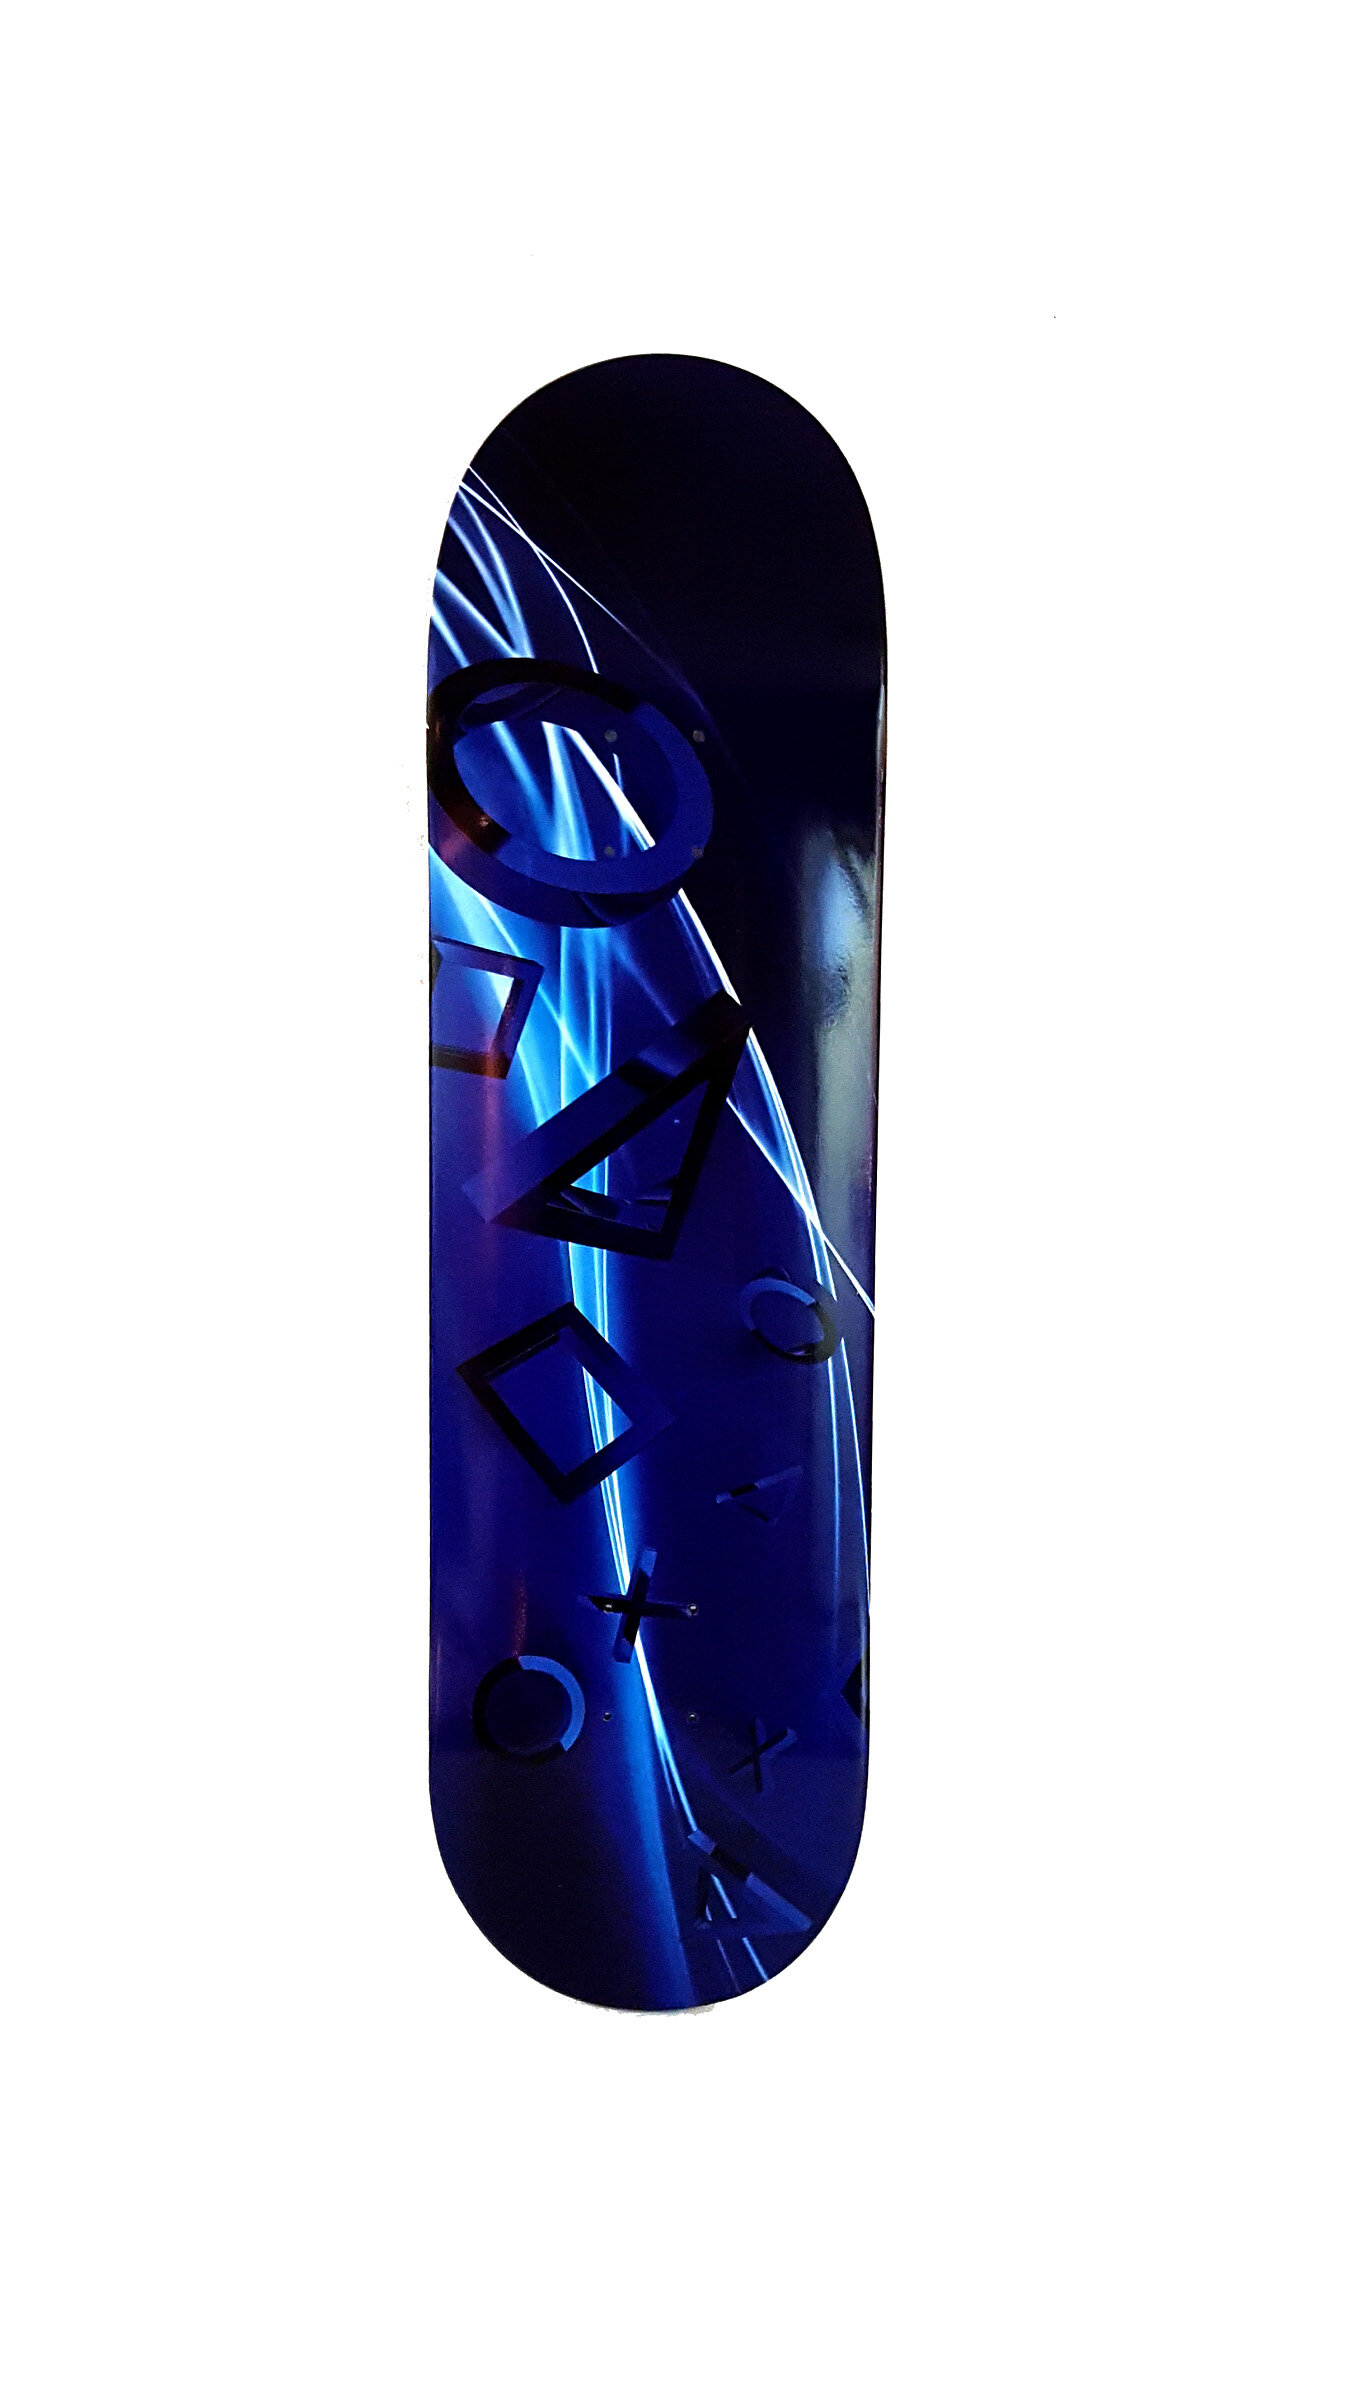 Promo Skateboards with Custom Graphics